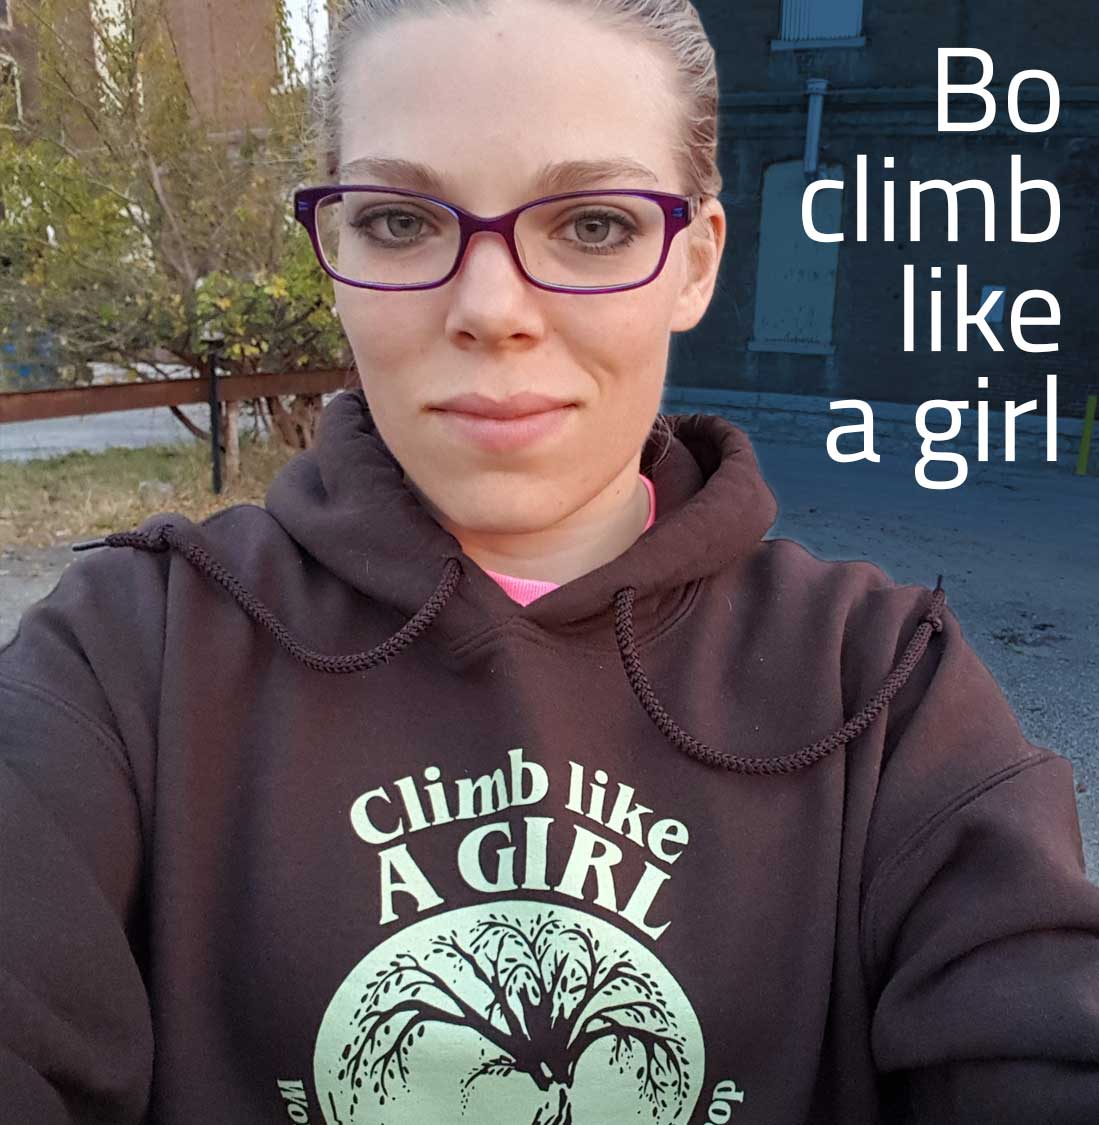 Bo climbs like a girl - a winning girl!